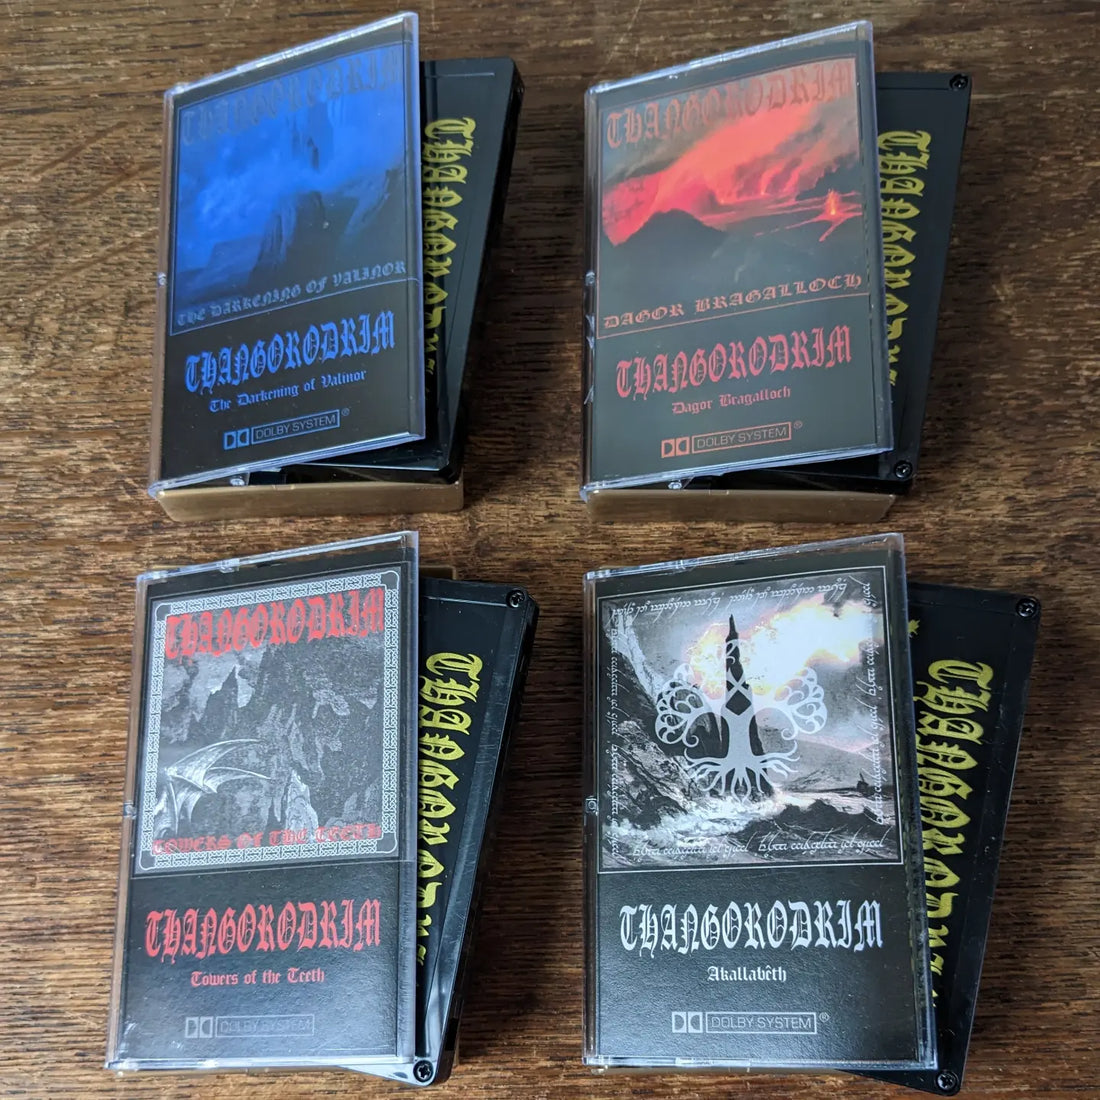 Thangorodrim reissue cassettes out now!